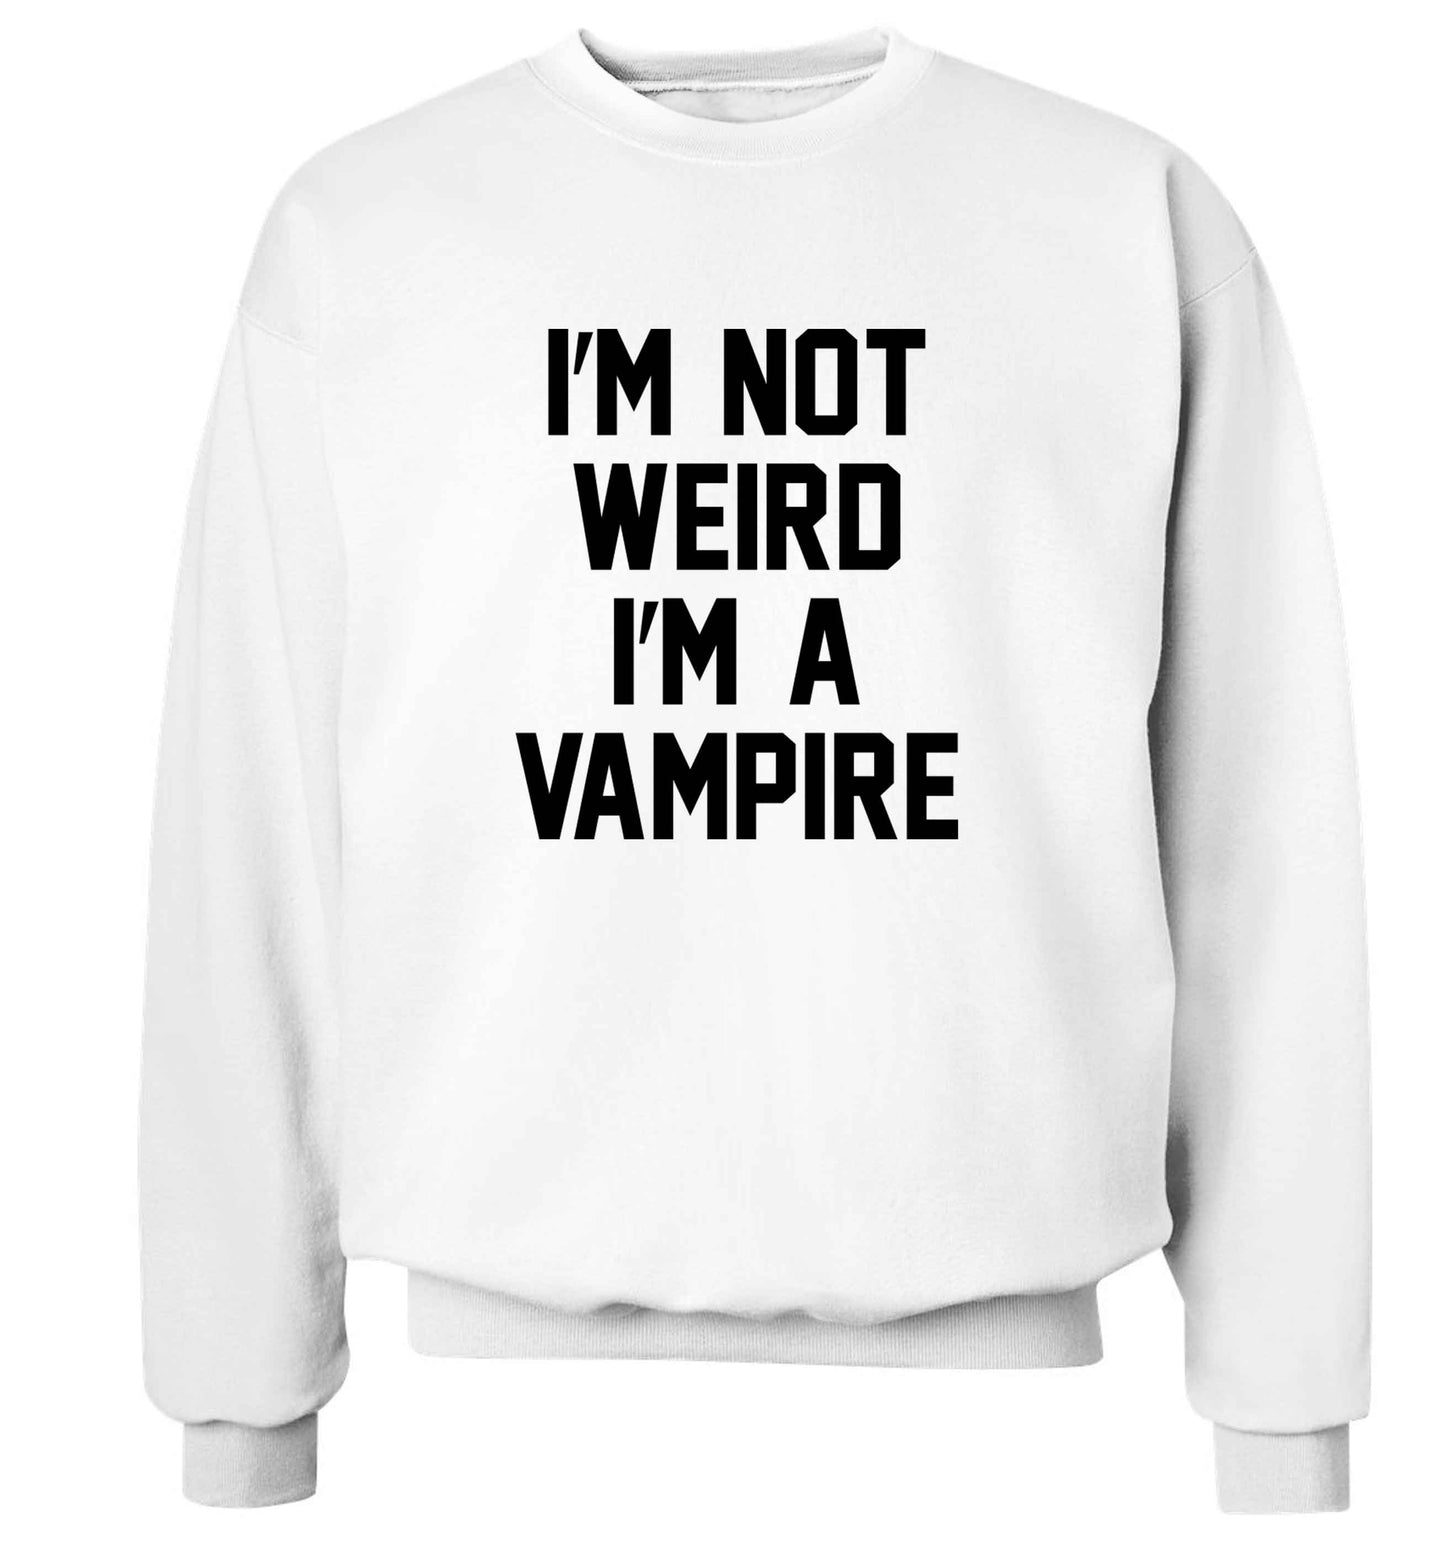 I'm not weird I'm a vampire adult's unisex white sweater 2XL